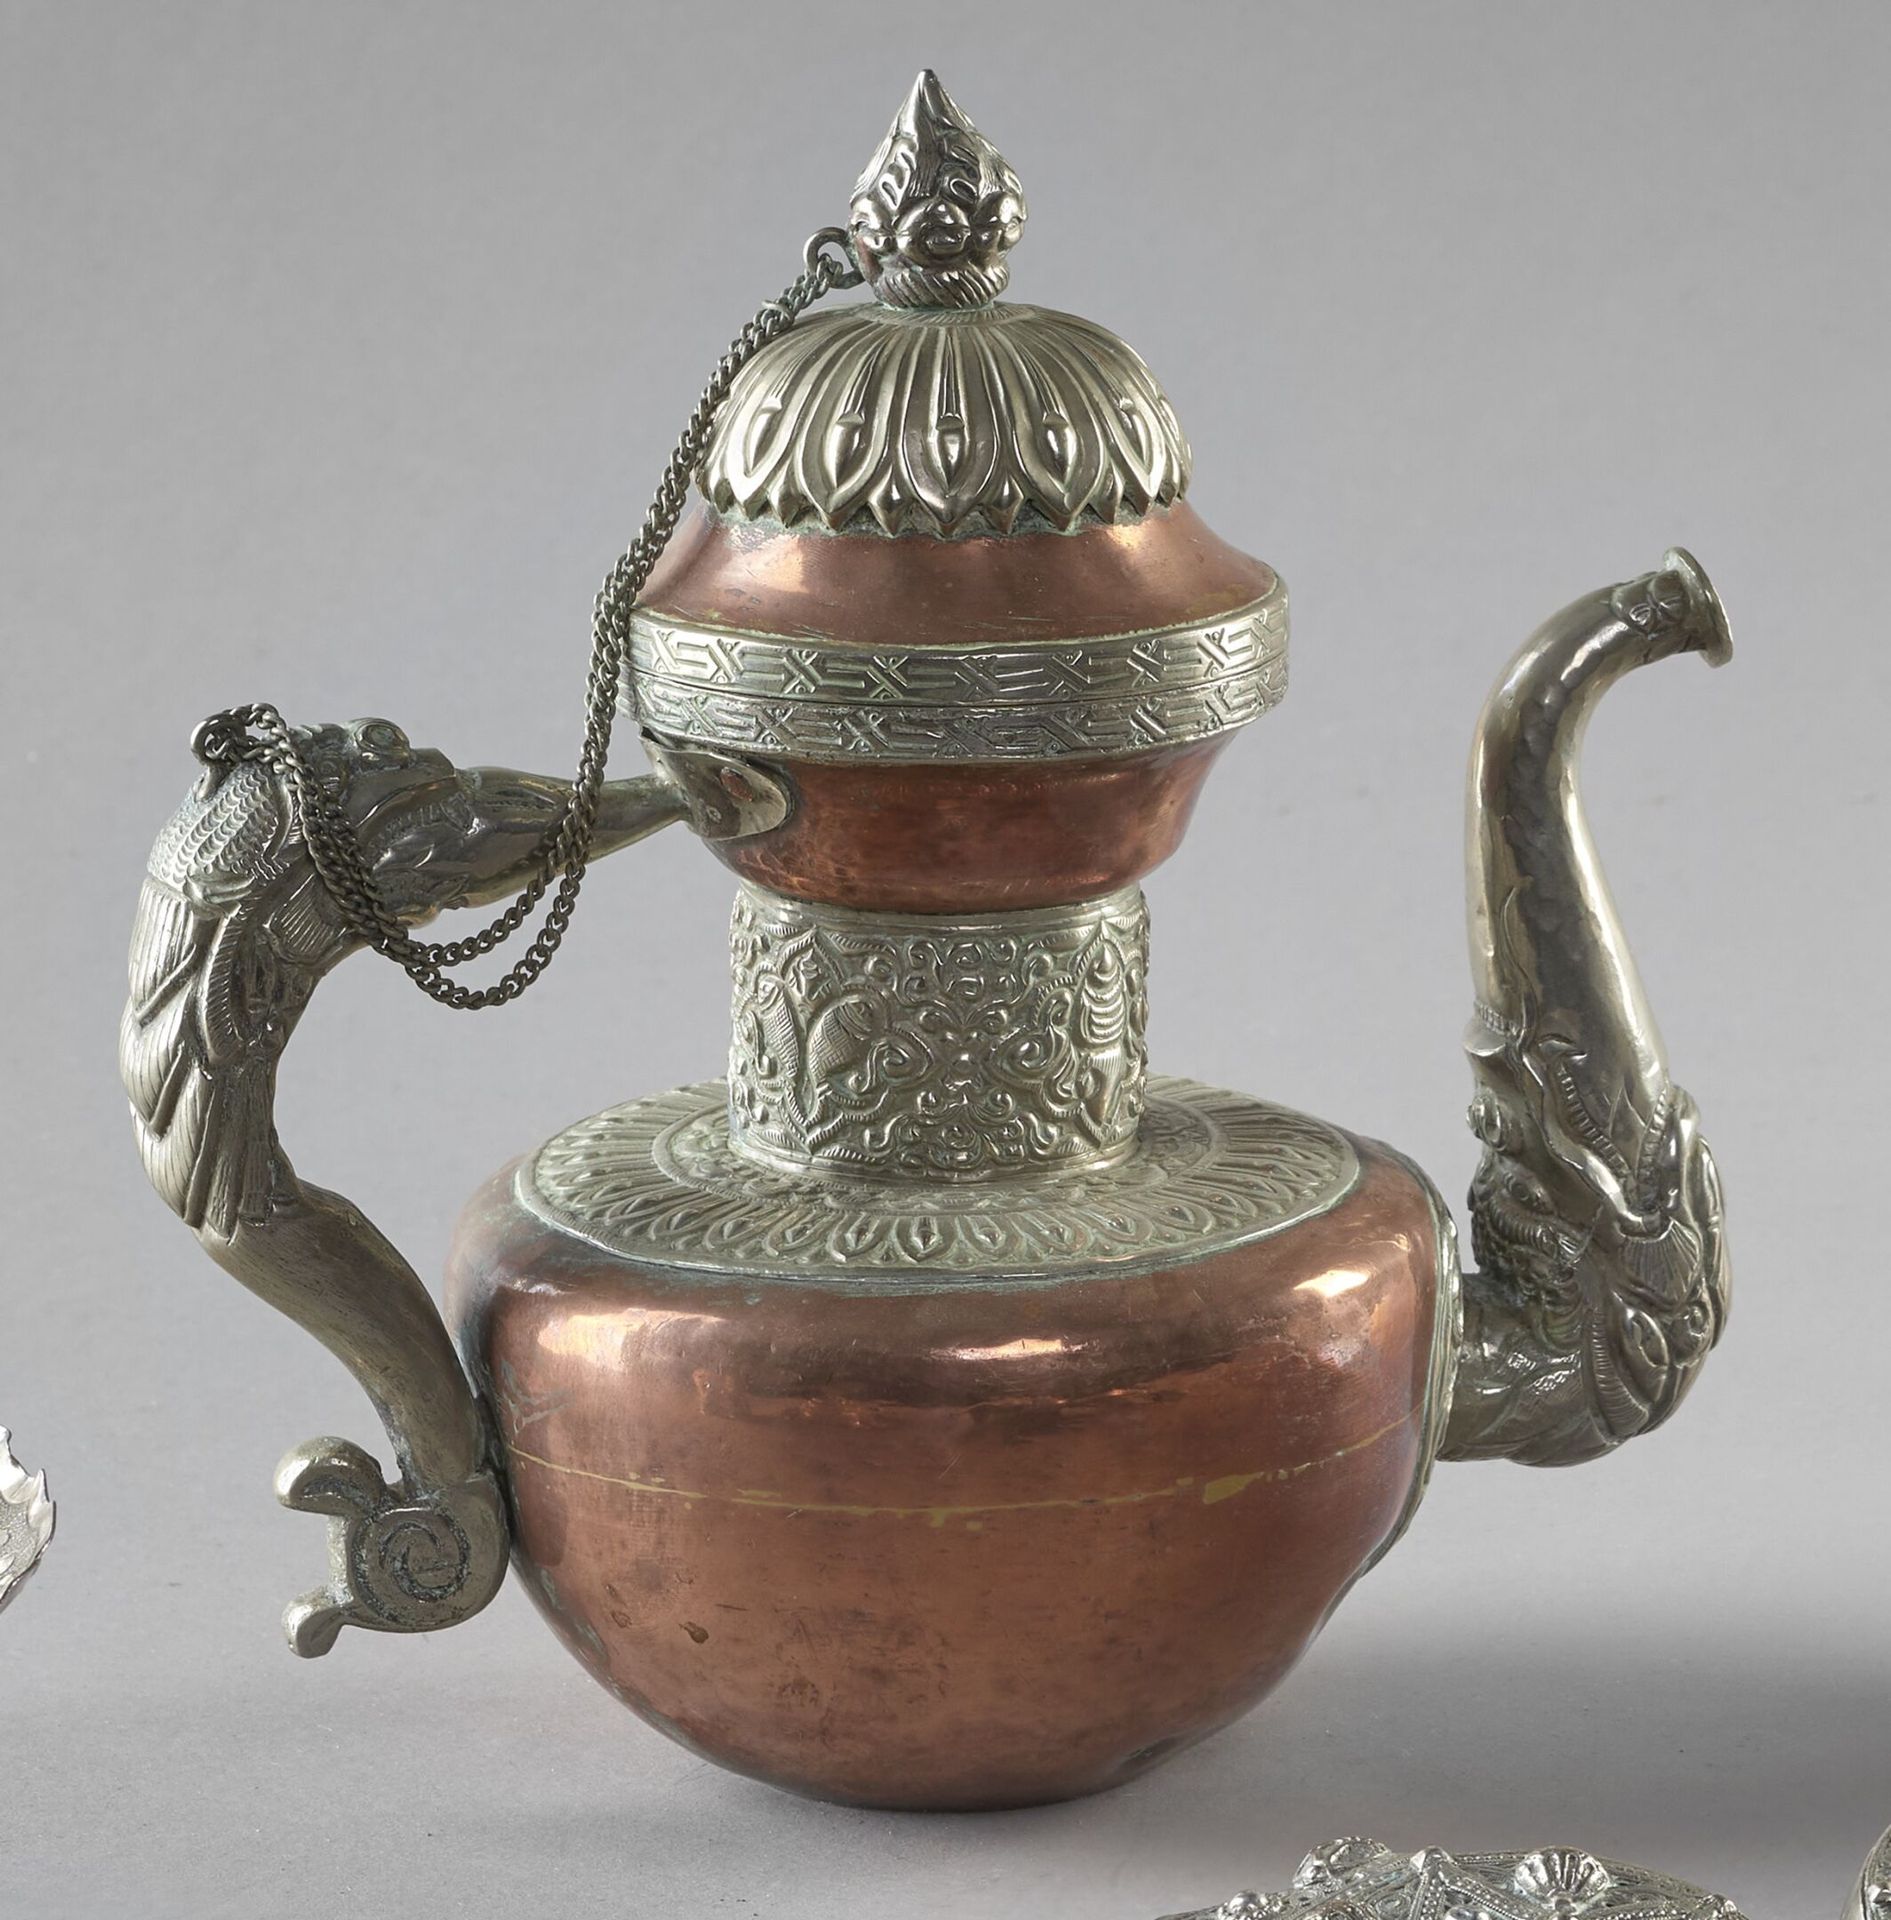 Null Tíbet, finales del siglo XIX/principios del XX
Olla de cobre y plata (títul&hellip;